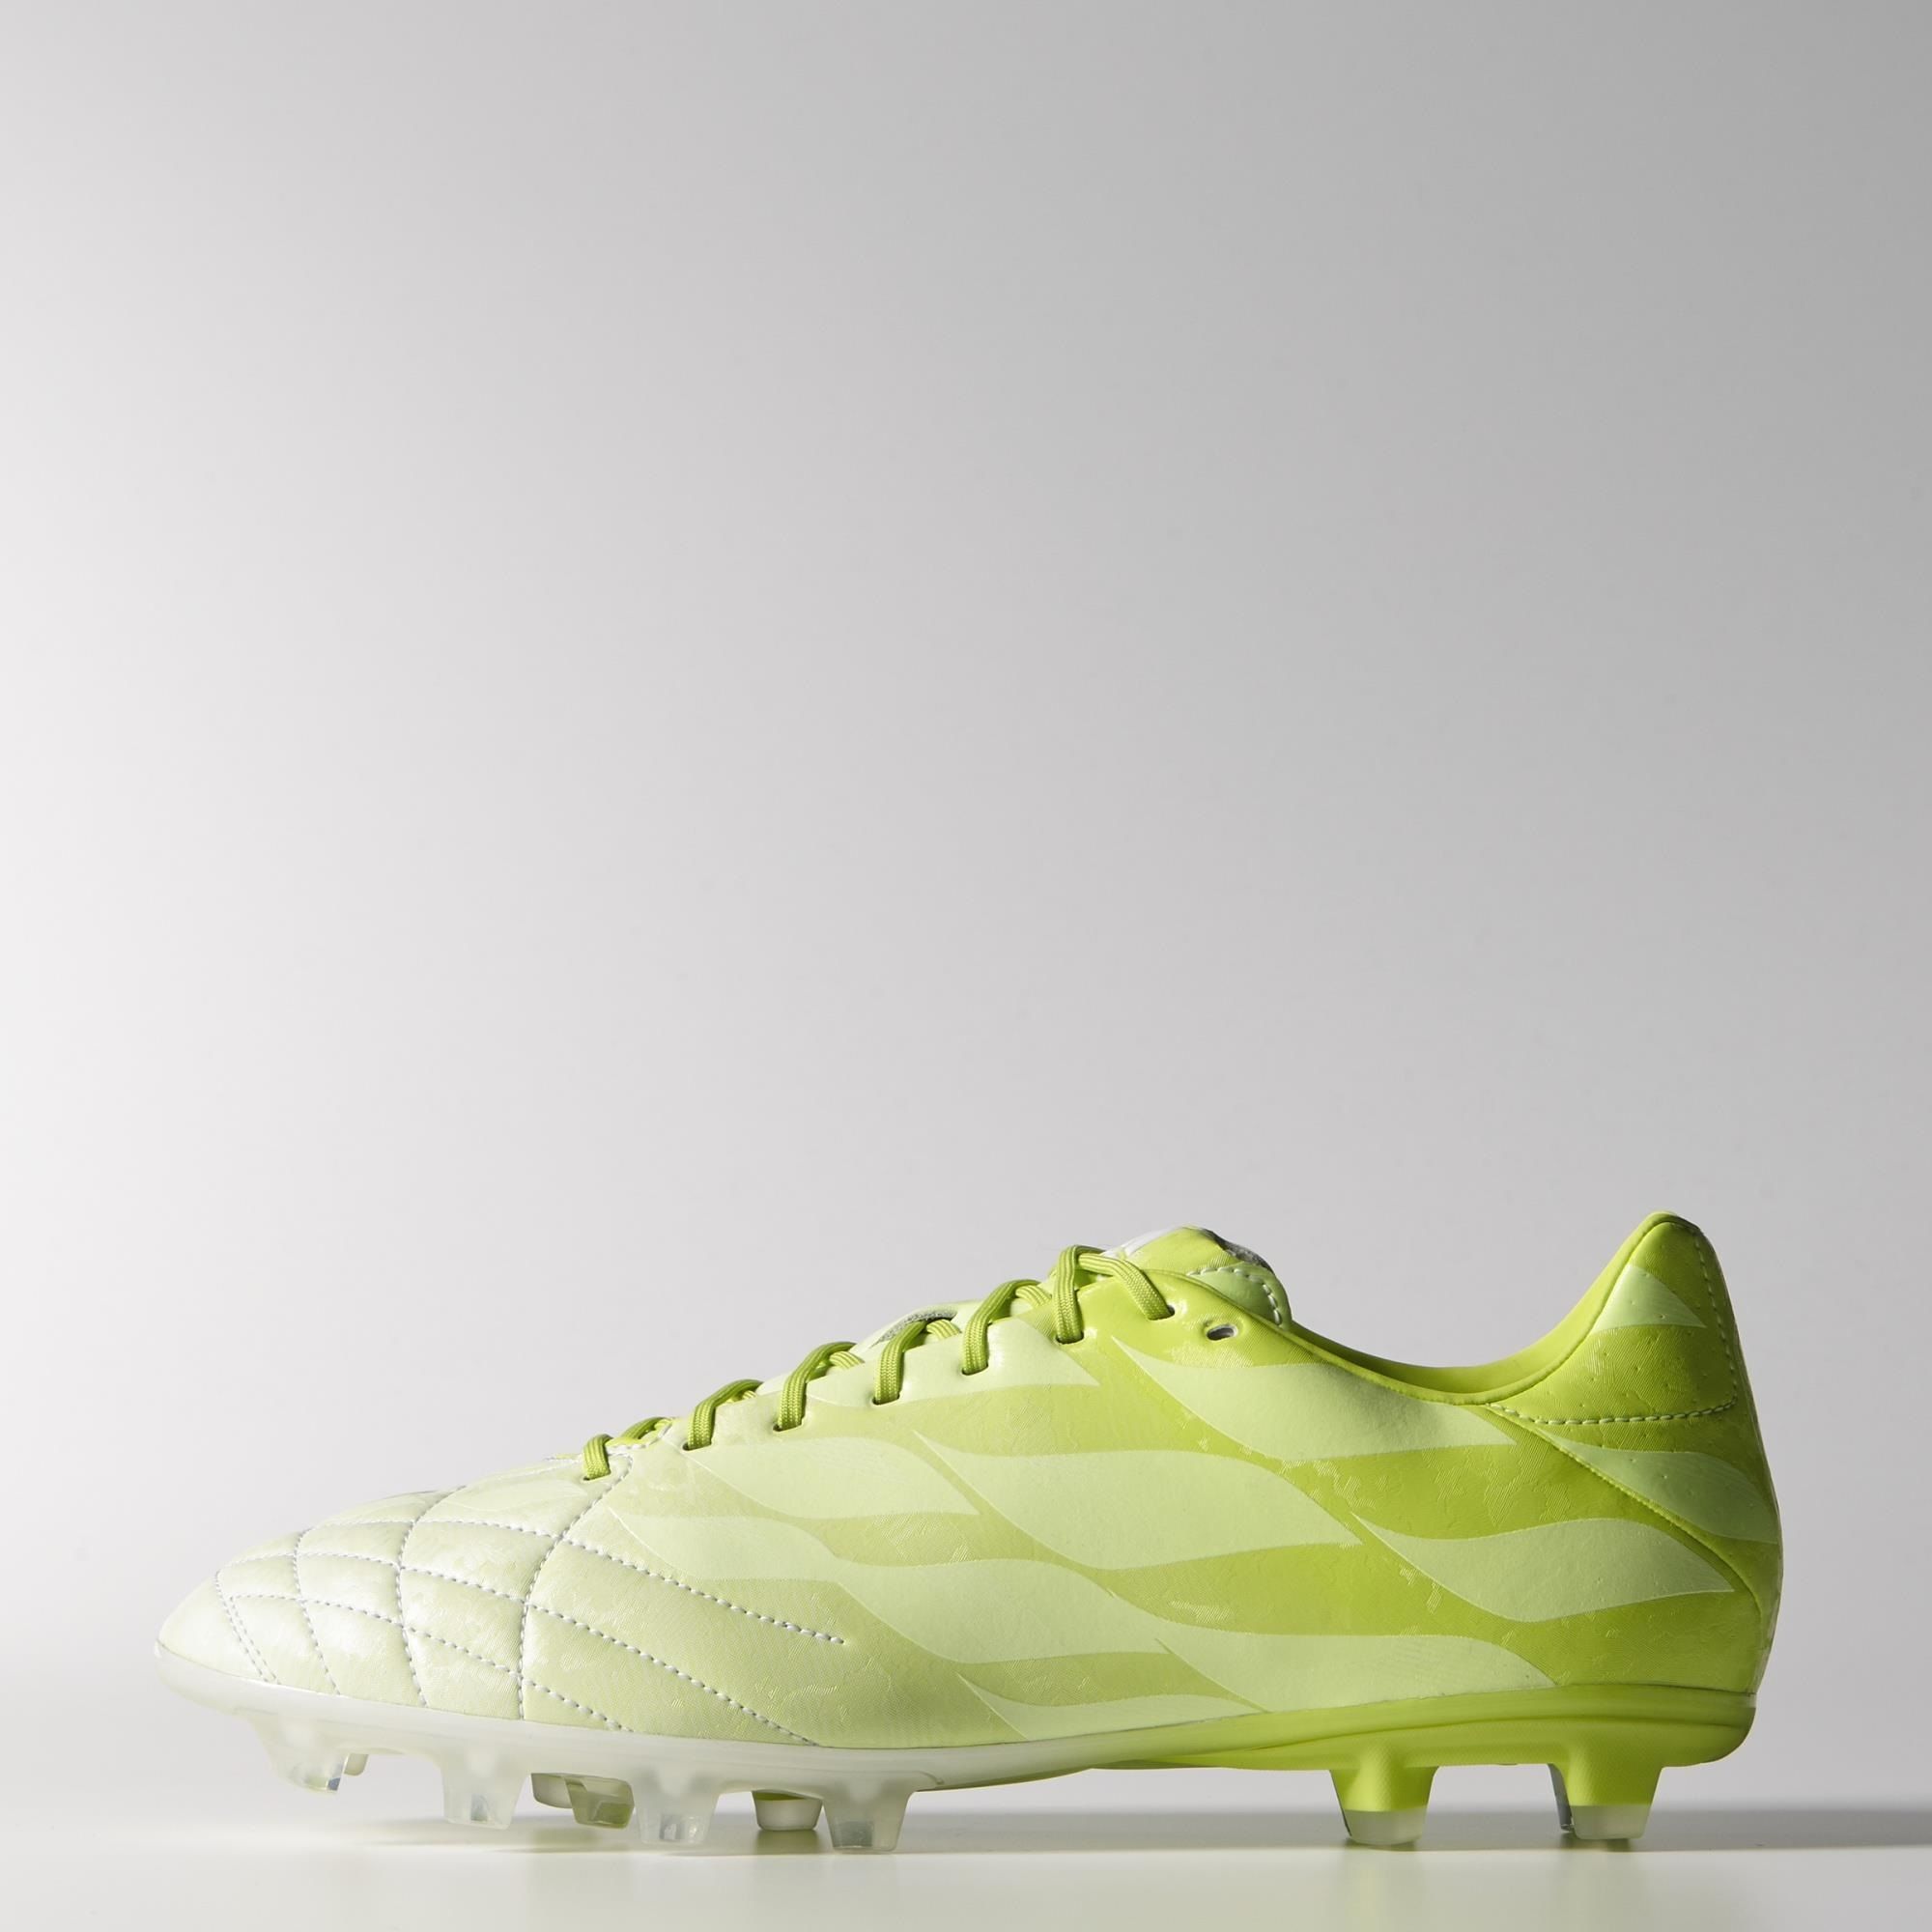 Adidas 11 Pro FG Glow in the Dark Hunt Series Boots | Football boots |  Football shirt blog